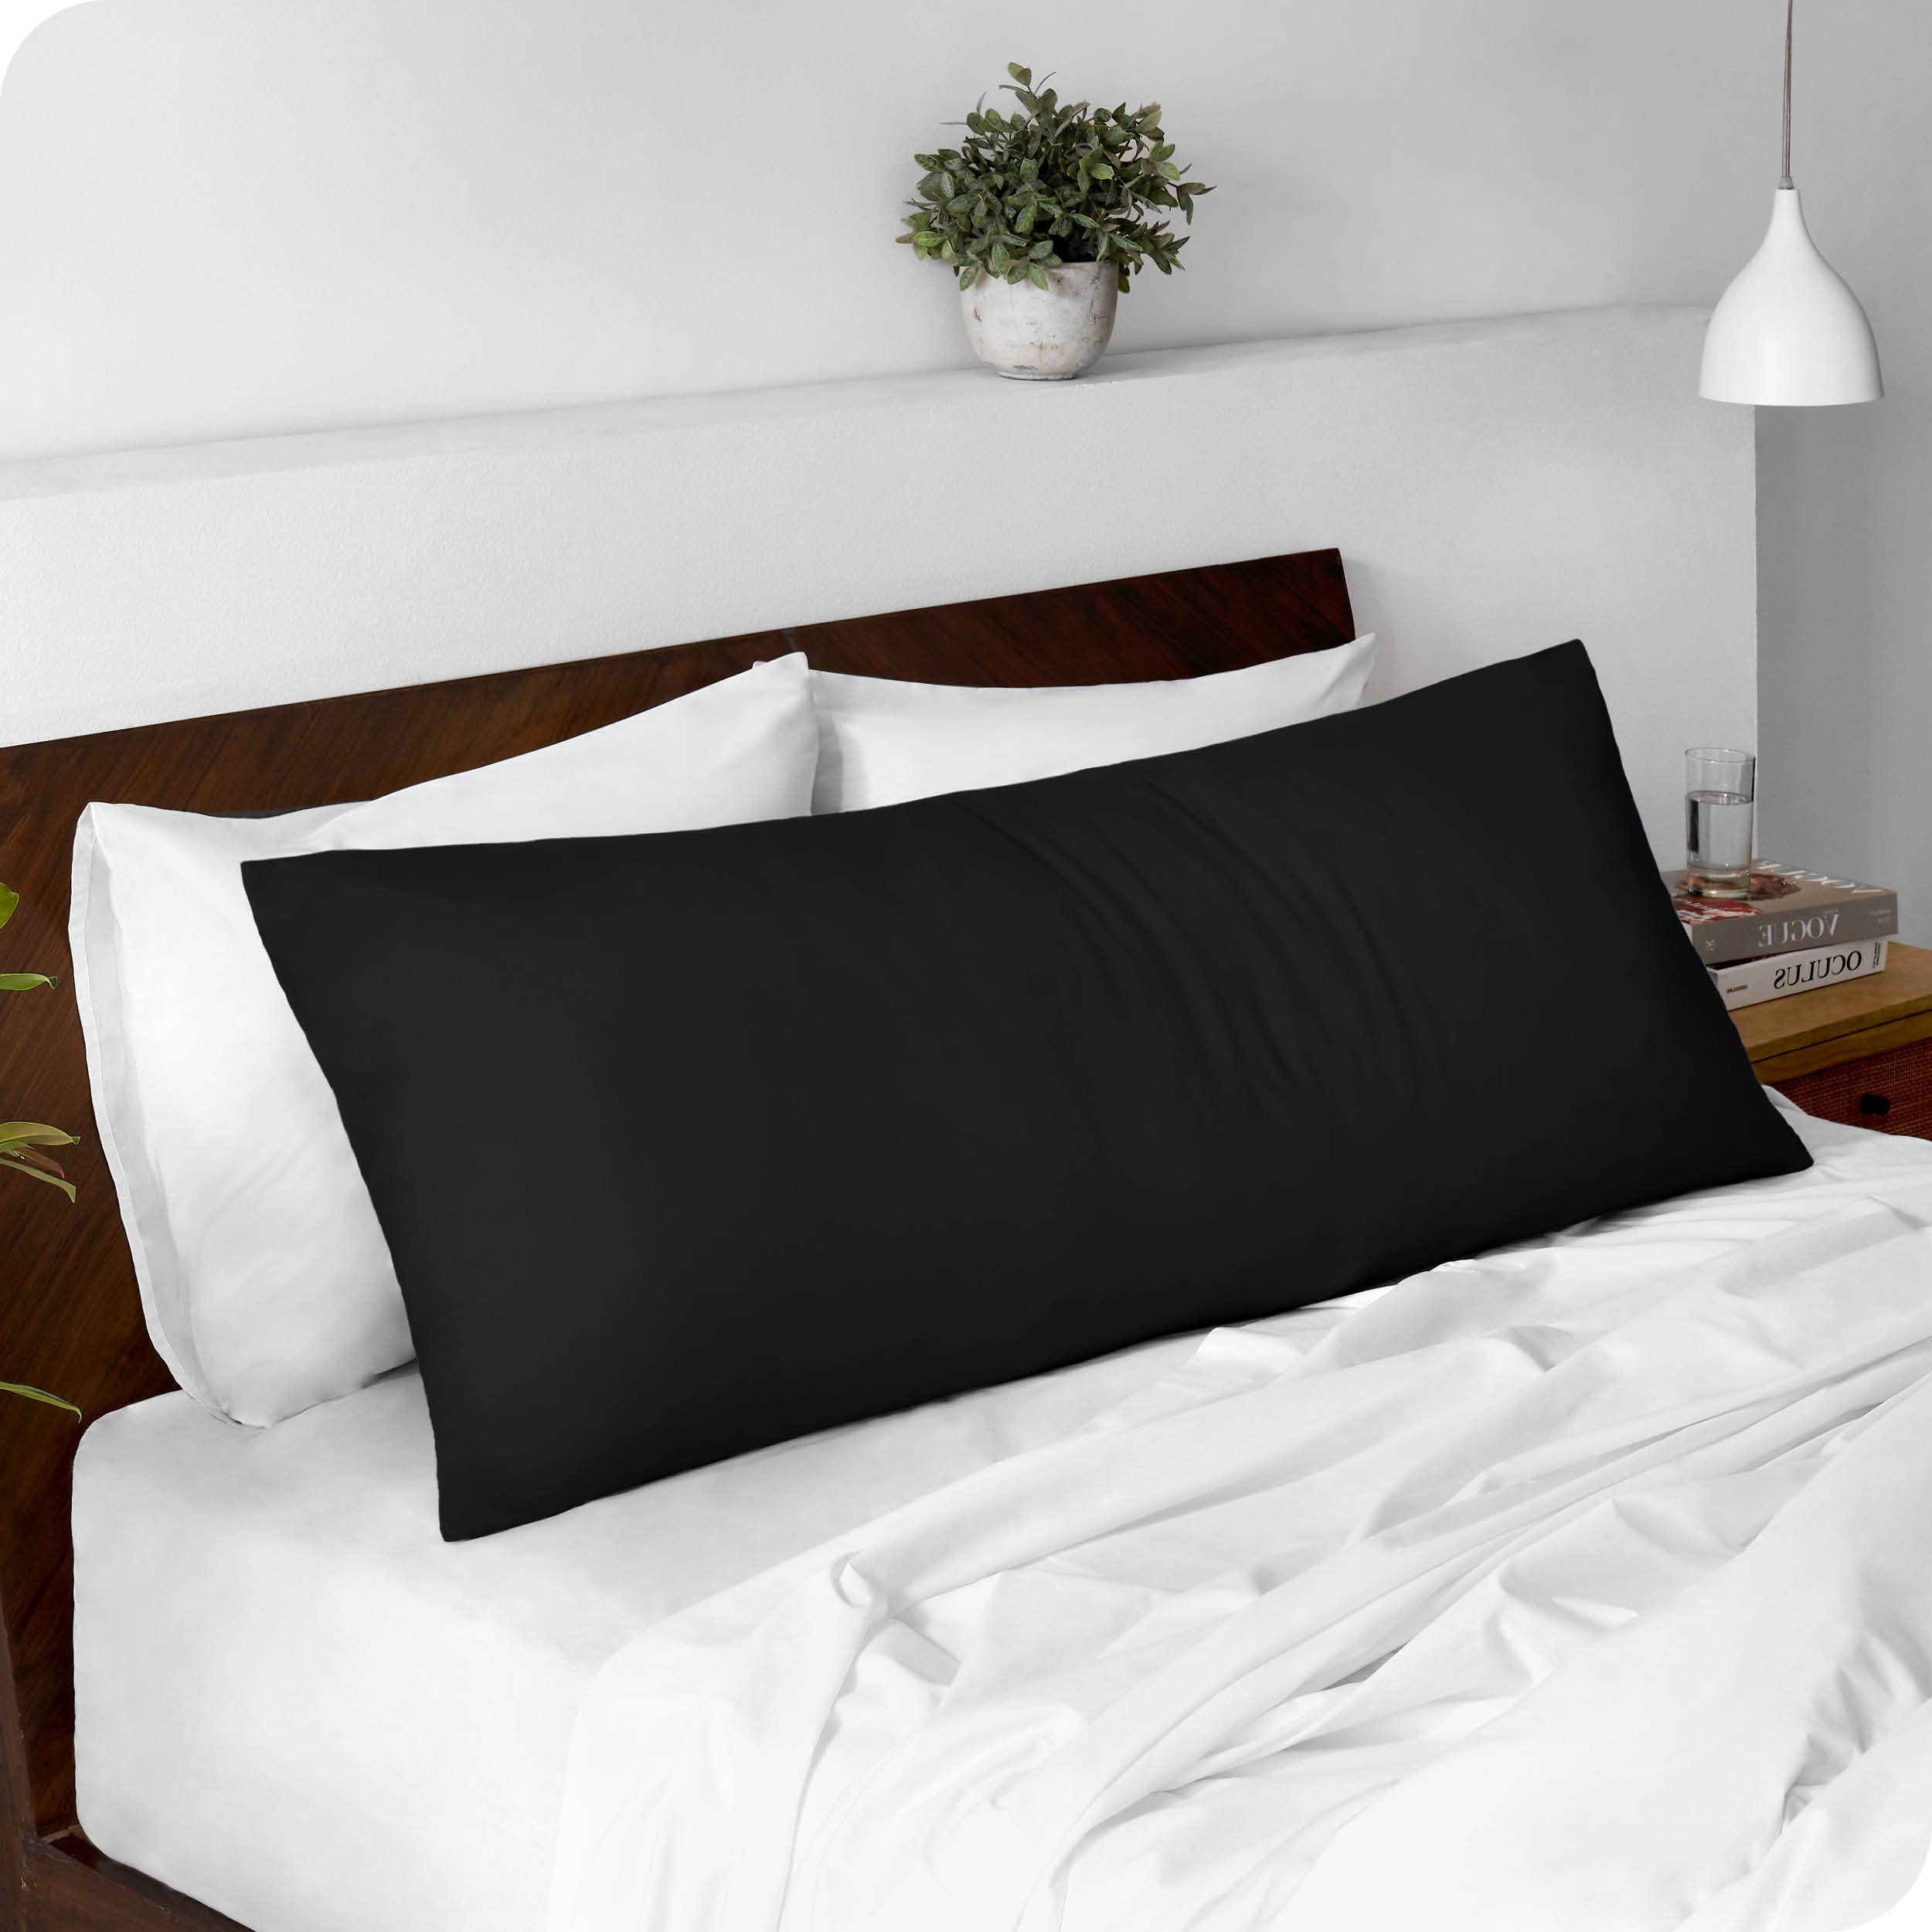 A body pillowcase on a pillow set against a headboard